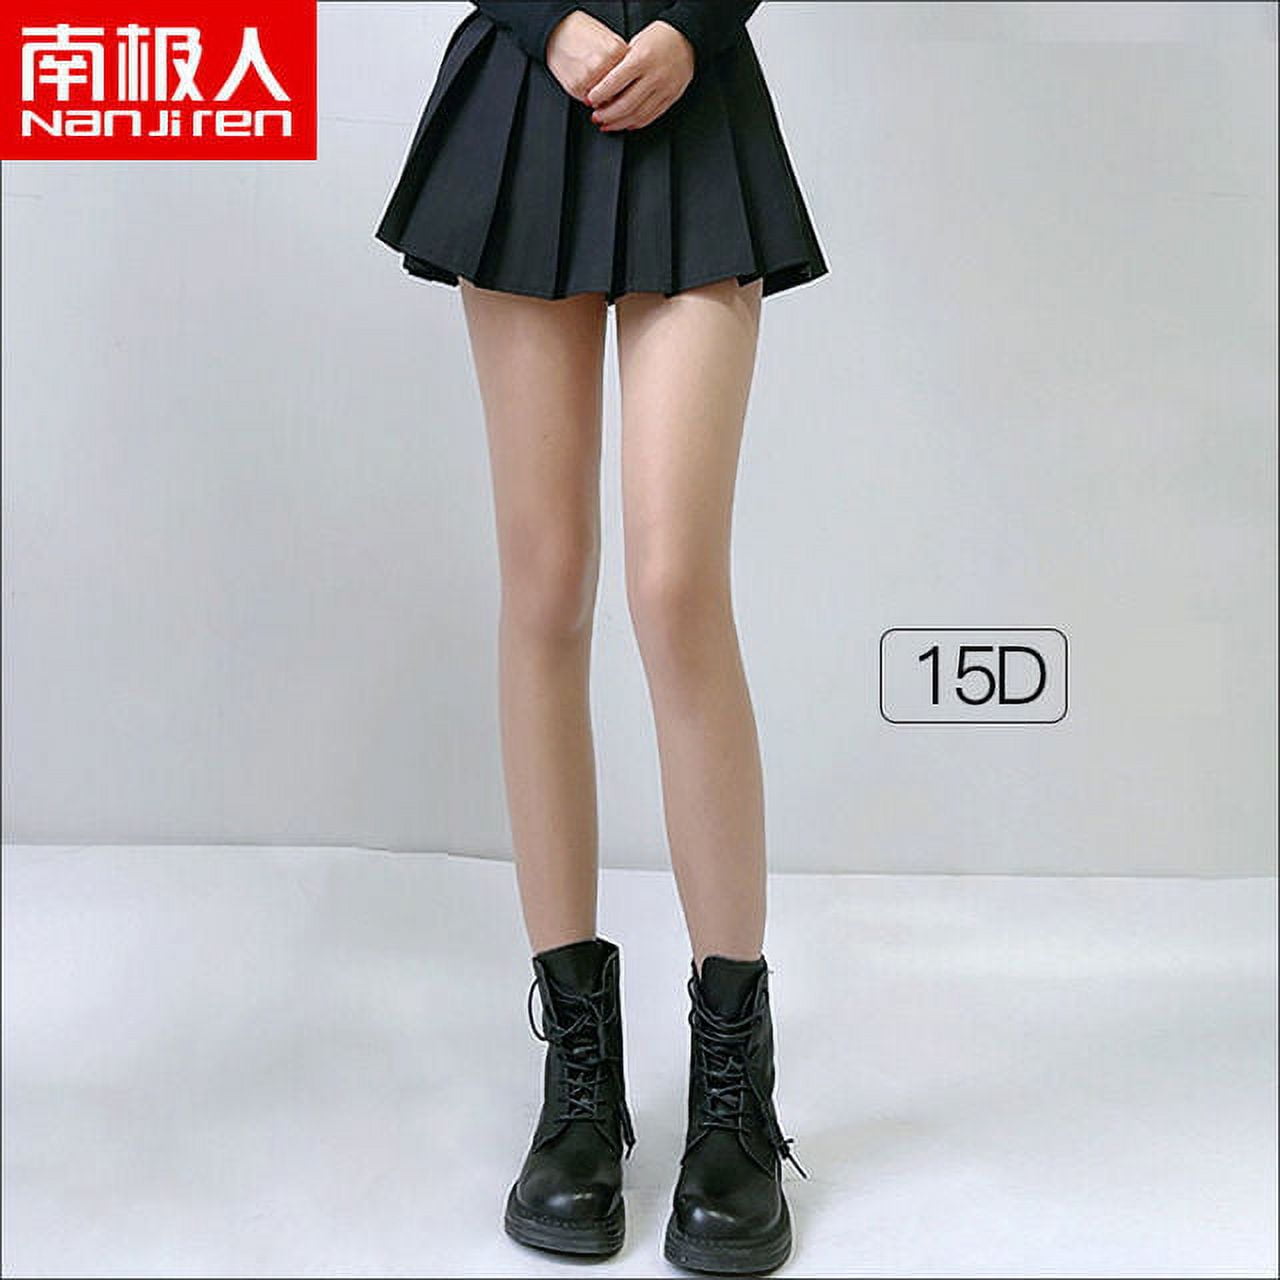 0D Thin Silk Stockings Transparent Leggings Women Pantyhose